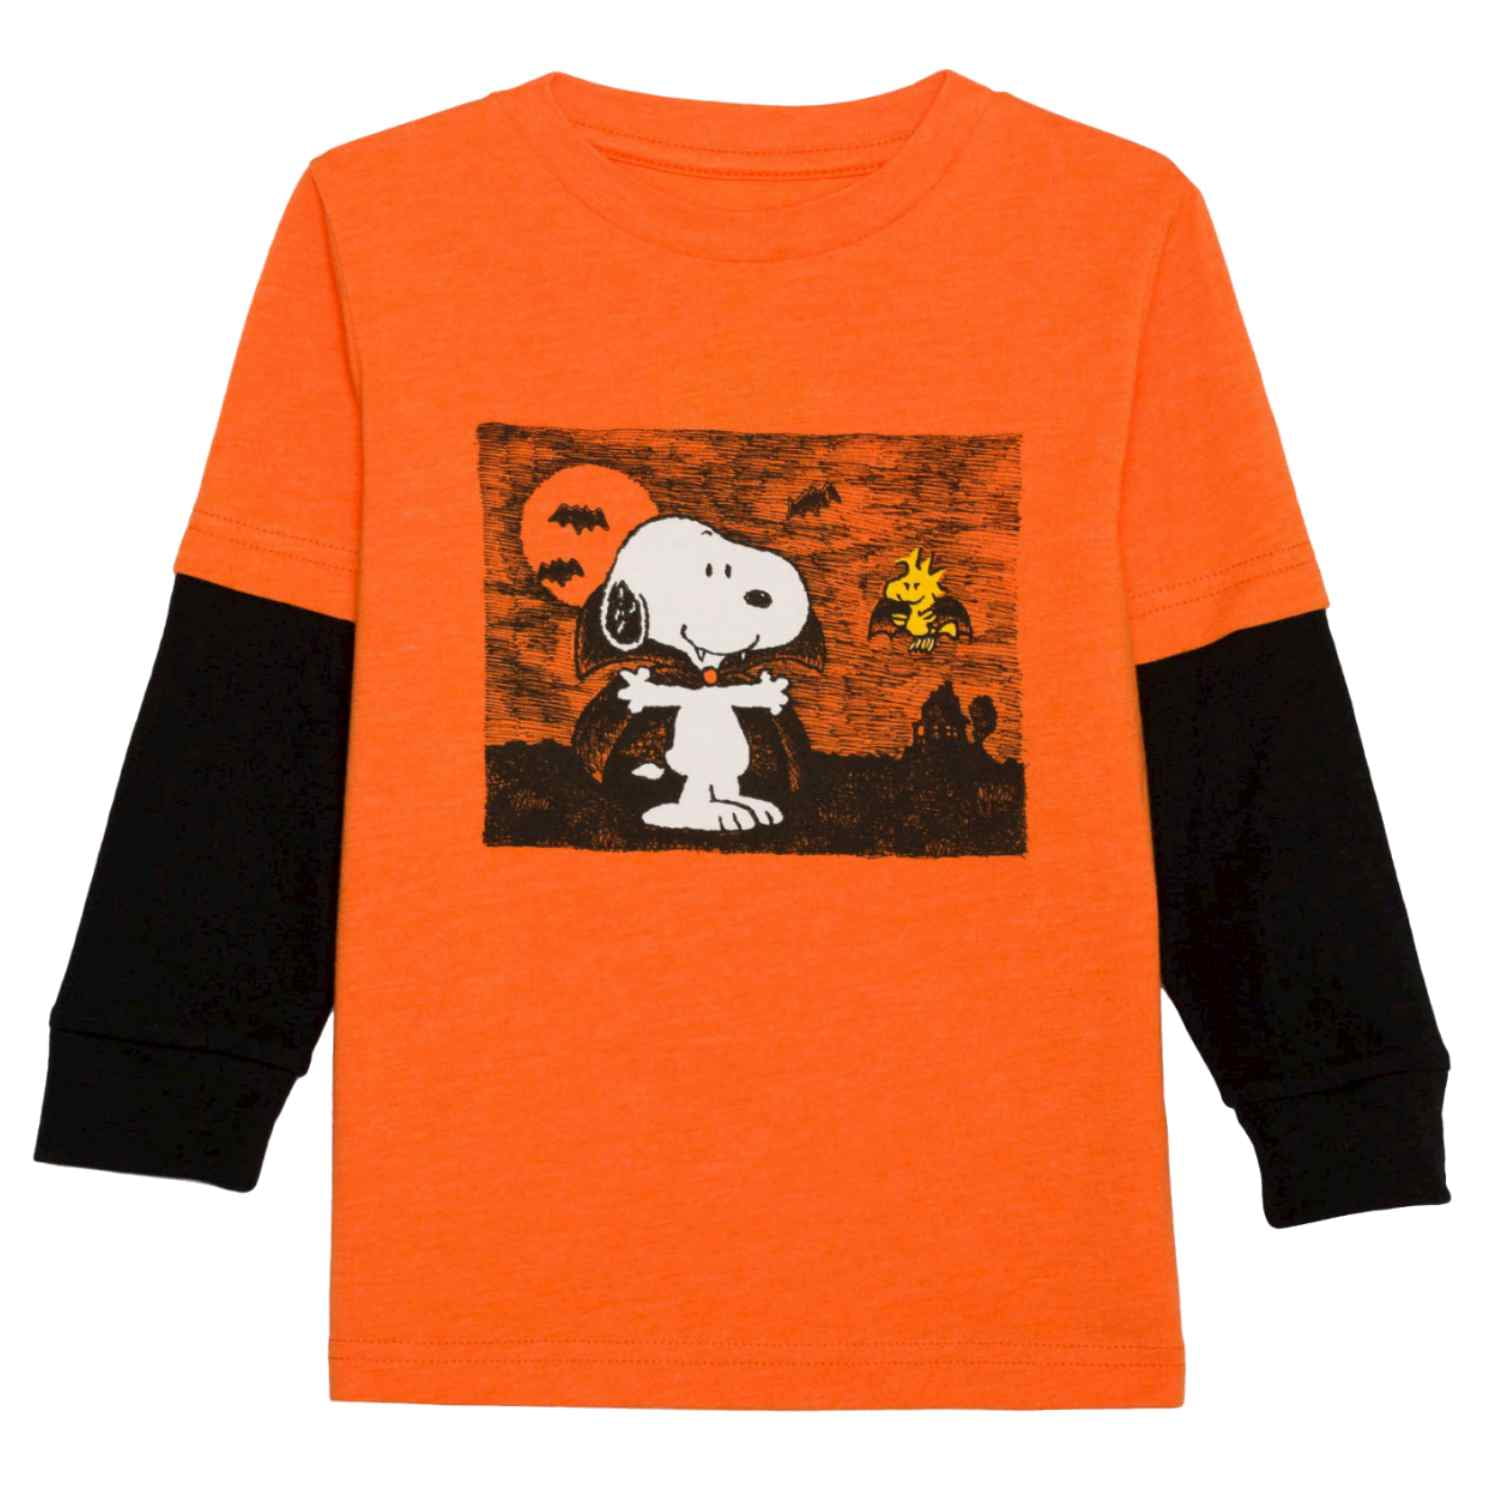 Buy > snoopy halloween shirt > in stock